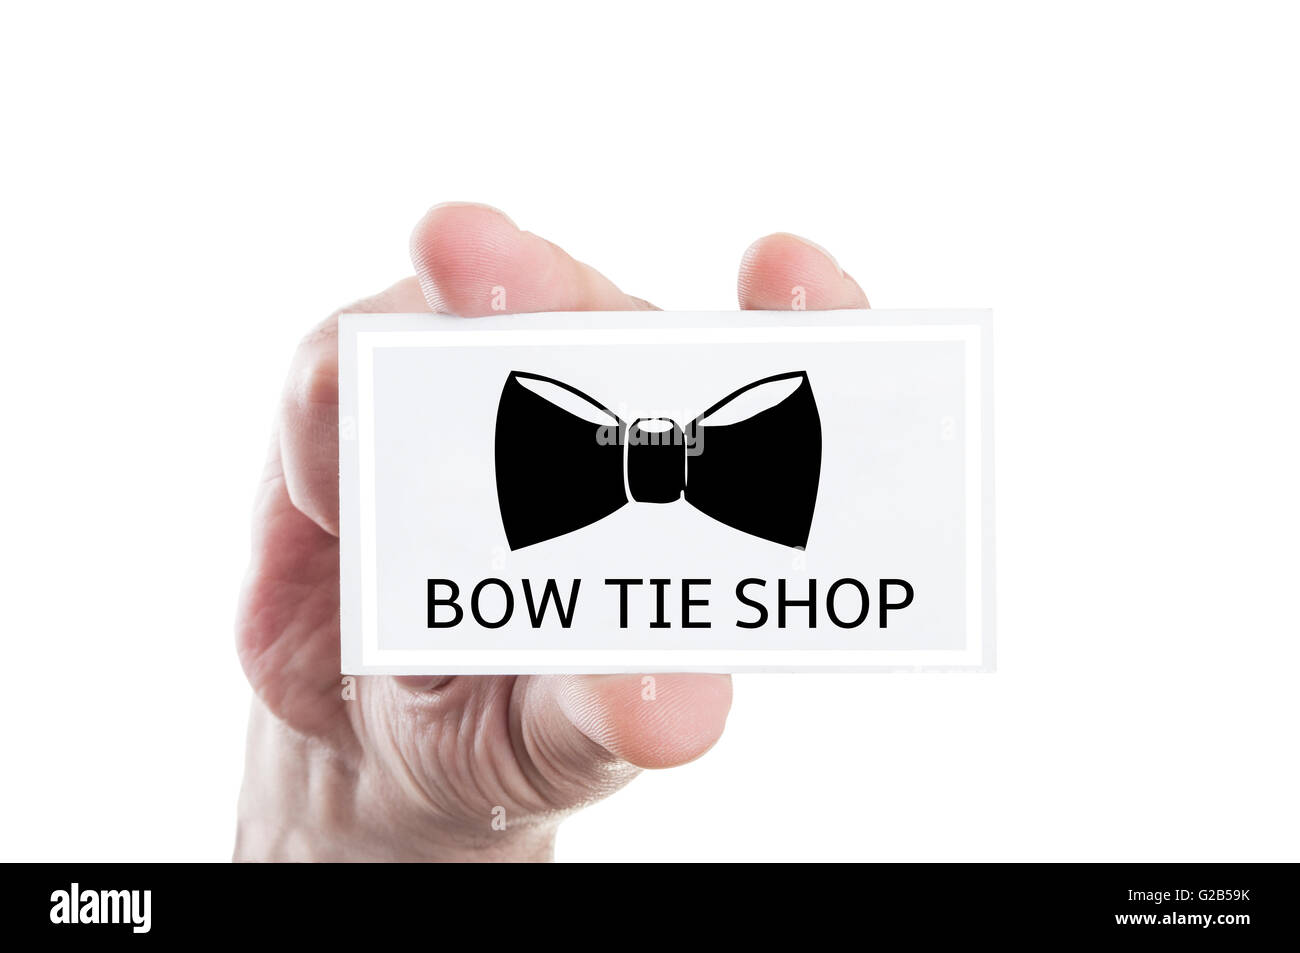 Bow tie shop or bowtie store concept design Stock Photo